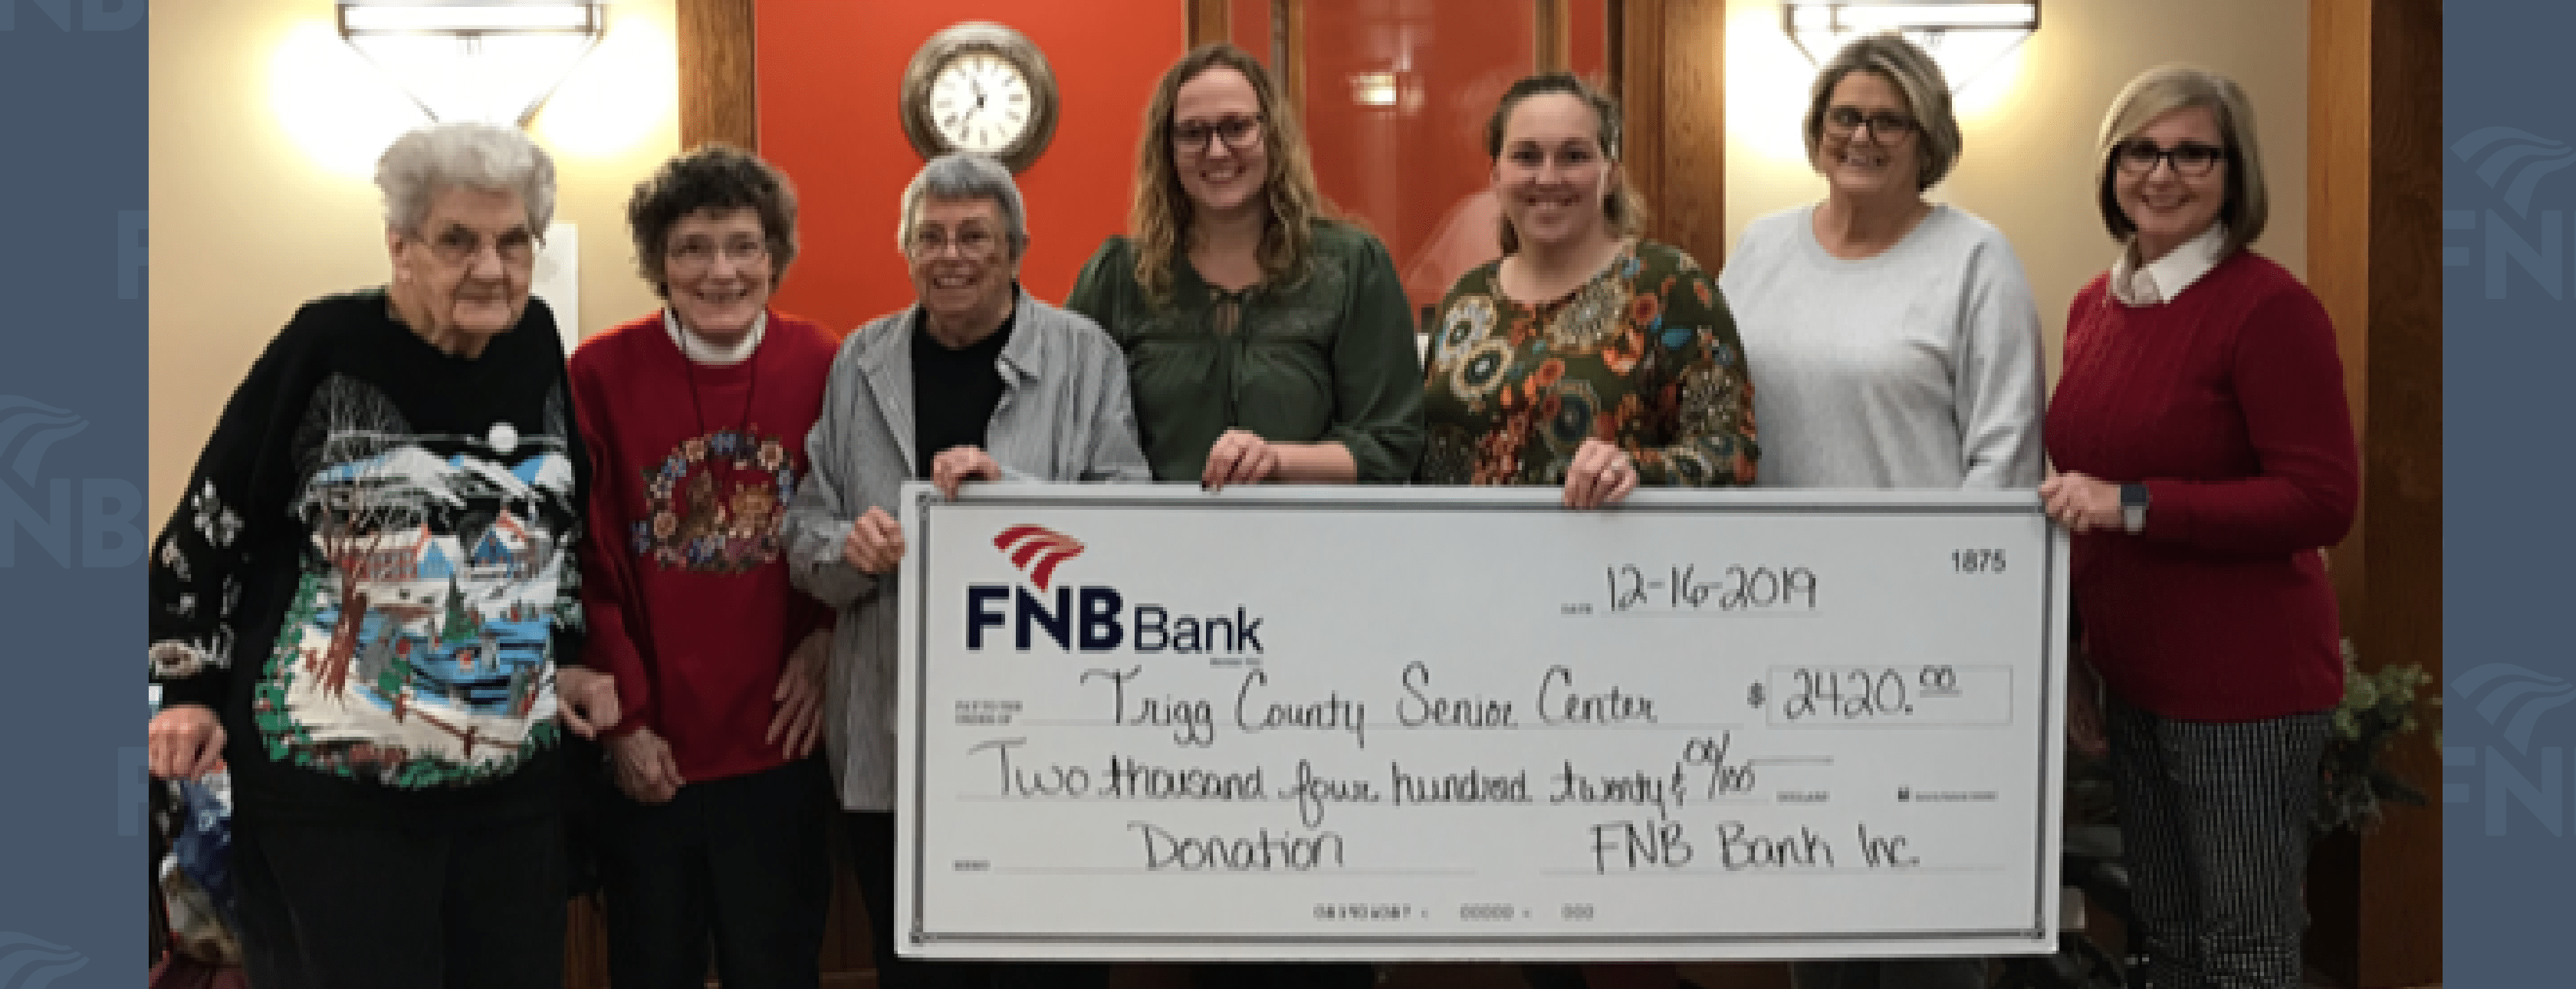 FNB Makes $2420 Donation to Trigg County Senior Citizens